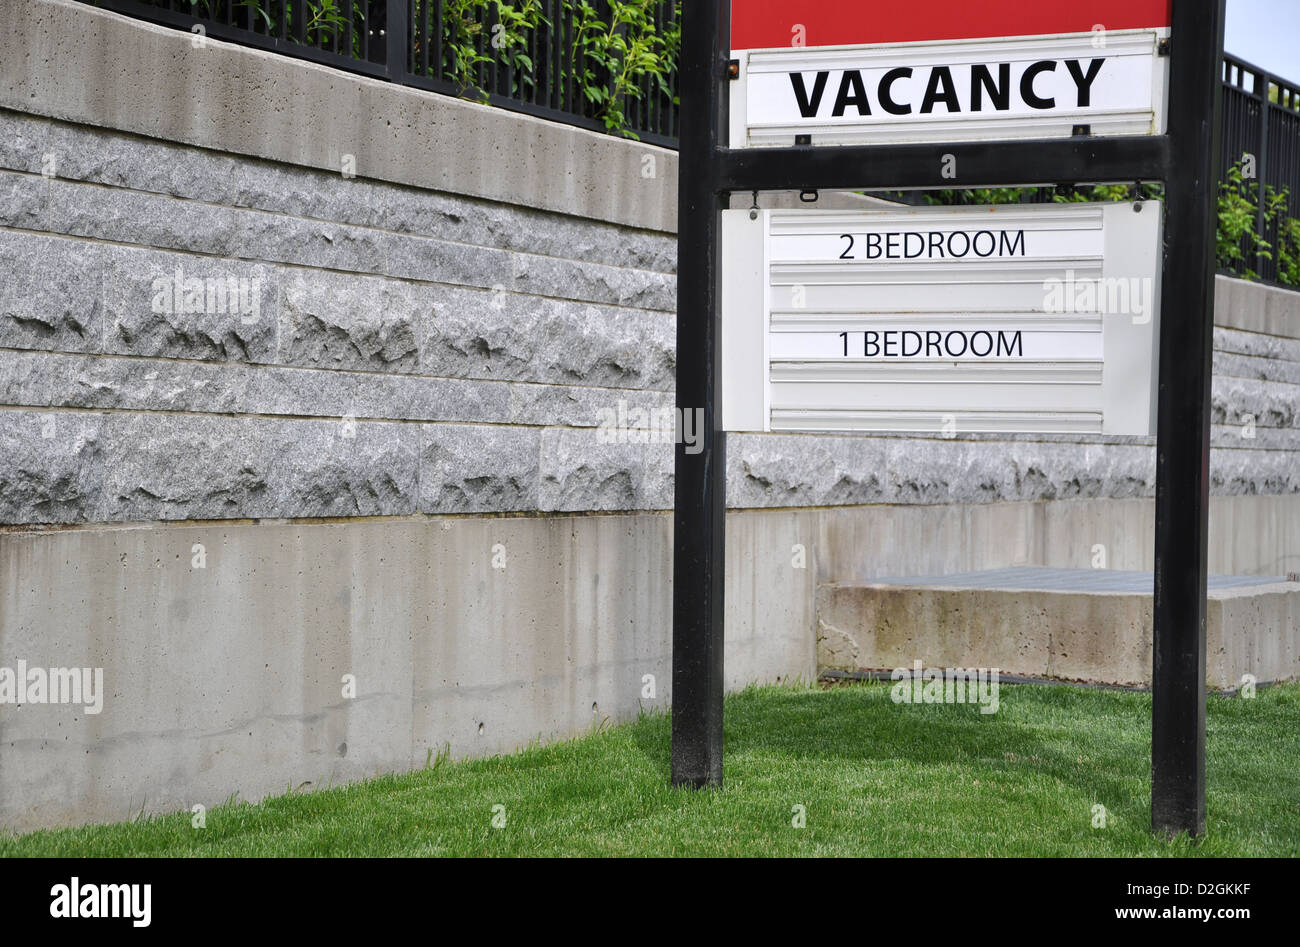 Vacancy sign Stock Photo